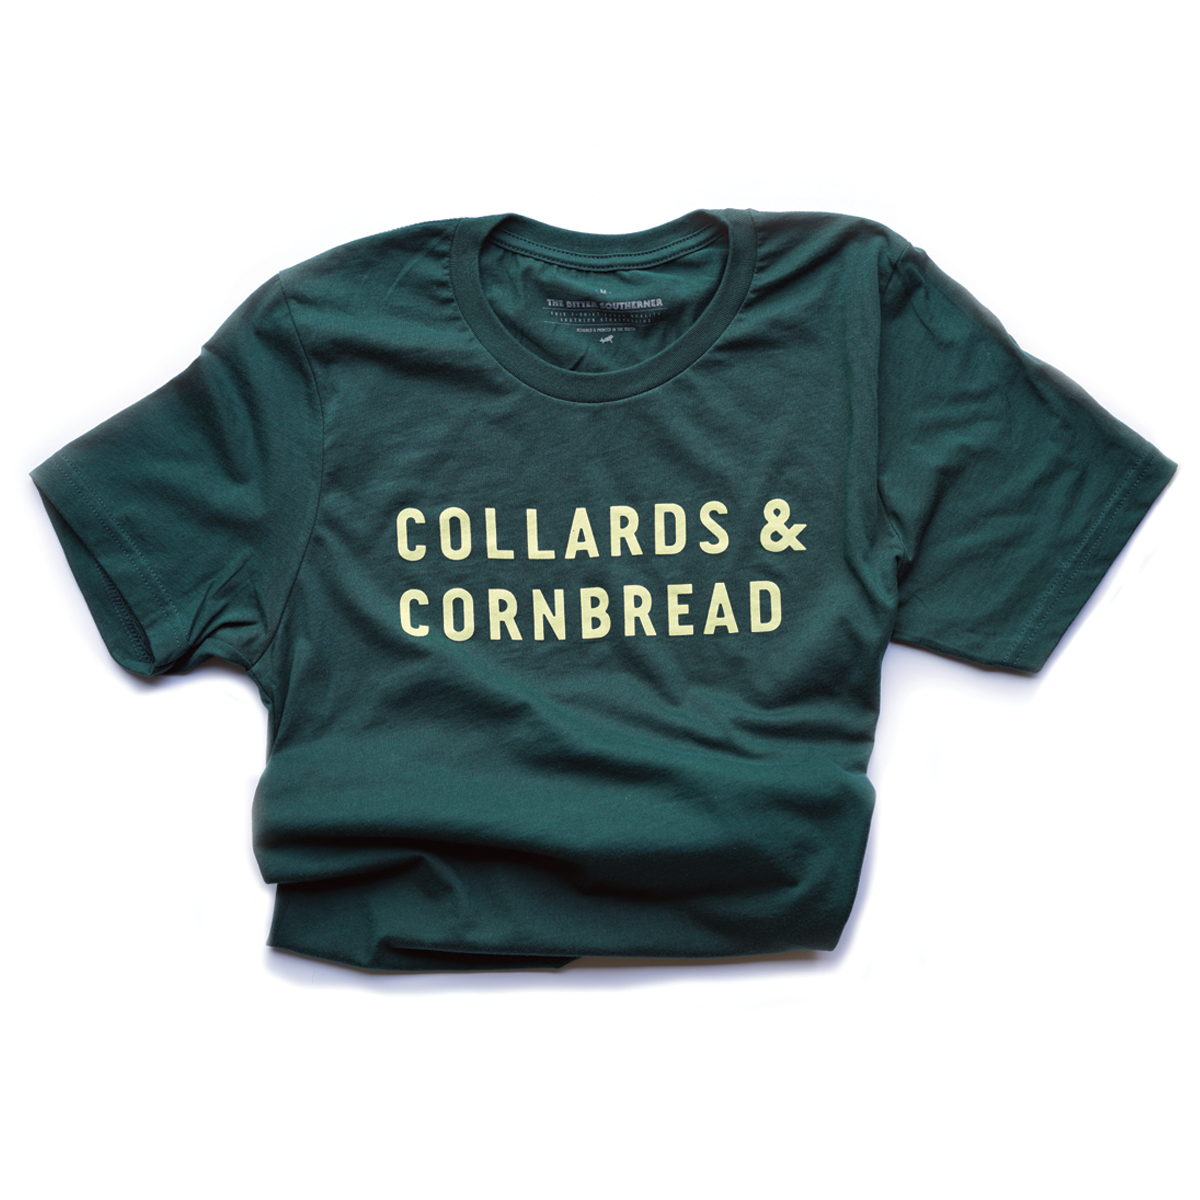 The Collards &amp; Cornbread Shirt